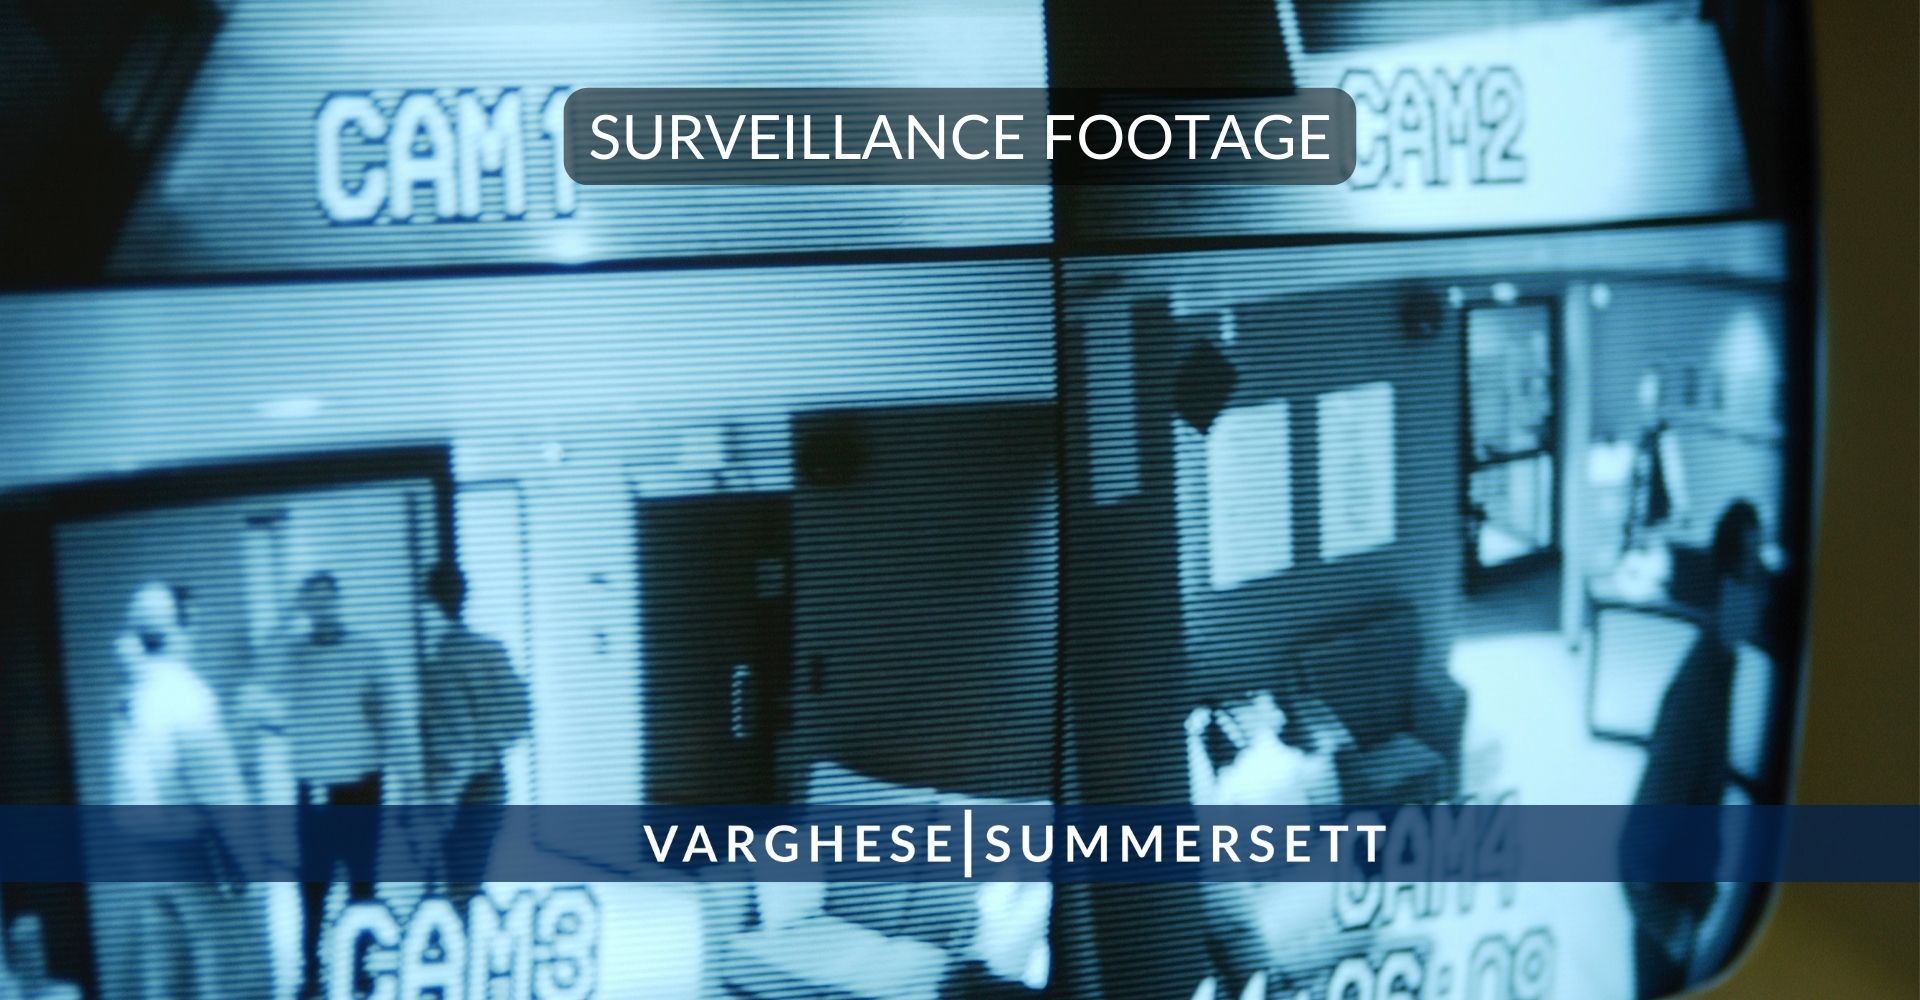 surveillance footage